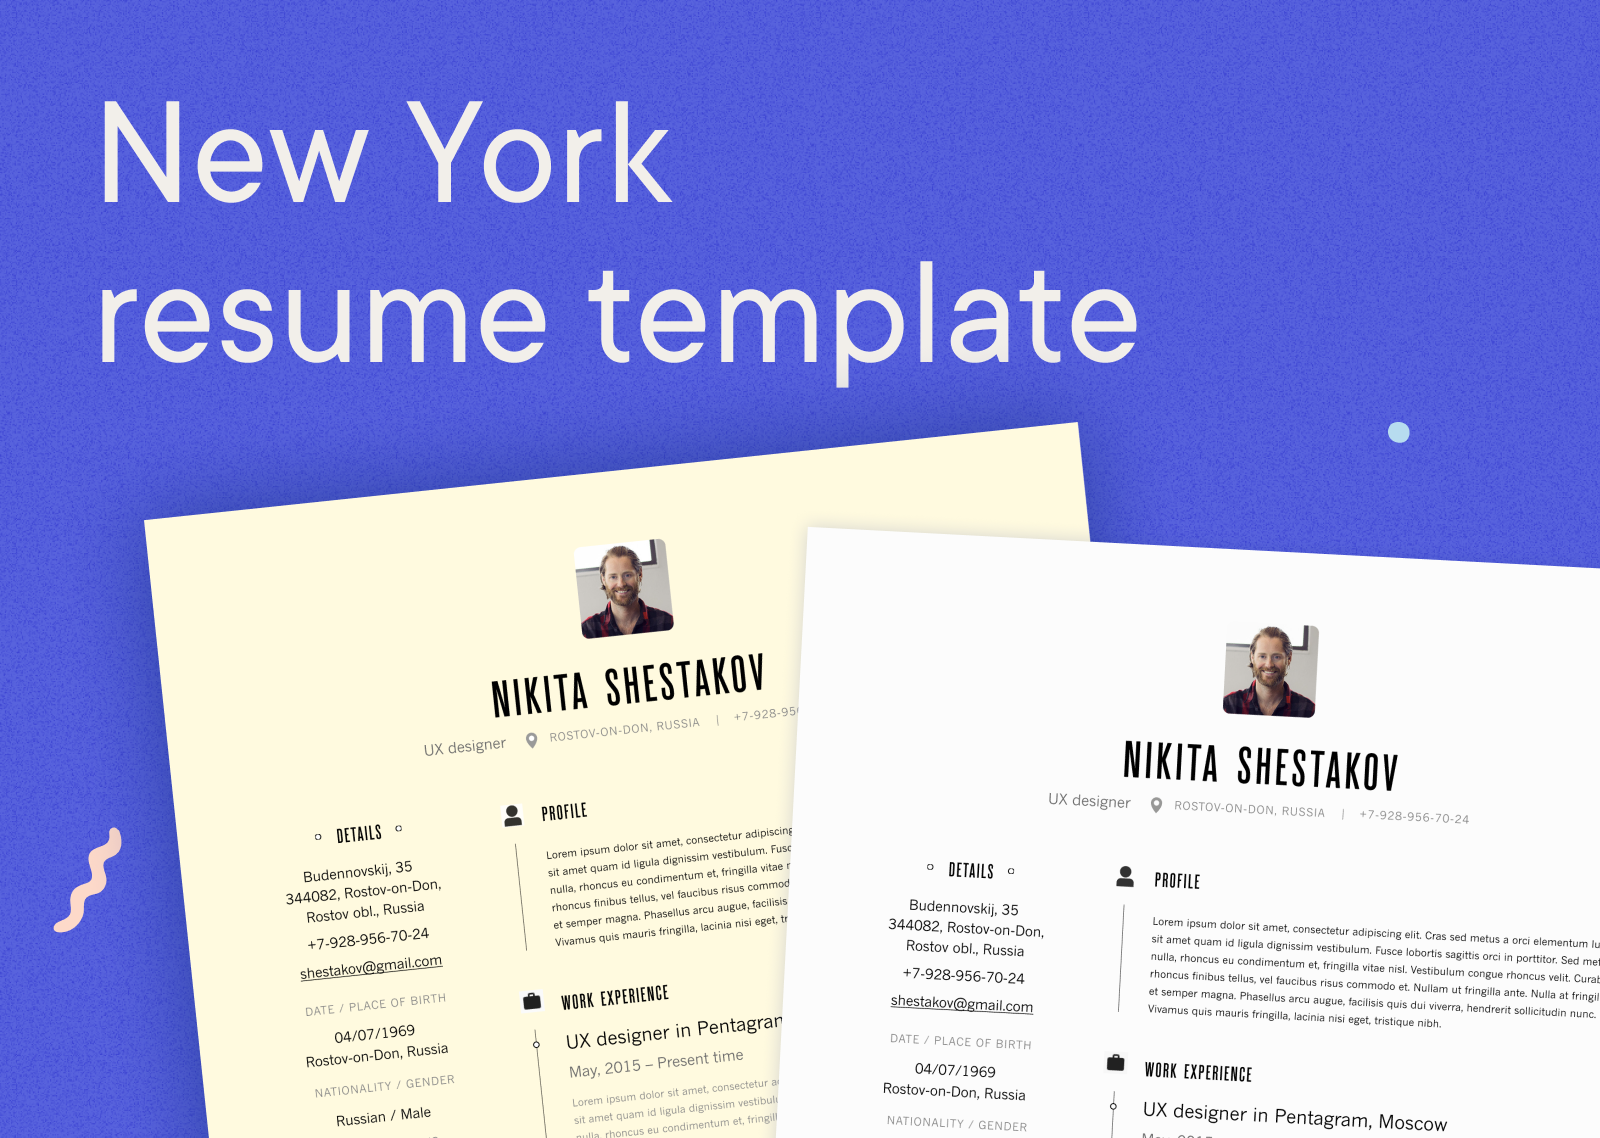 Blogs - New York resume template